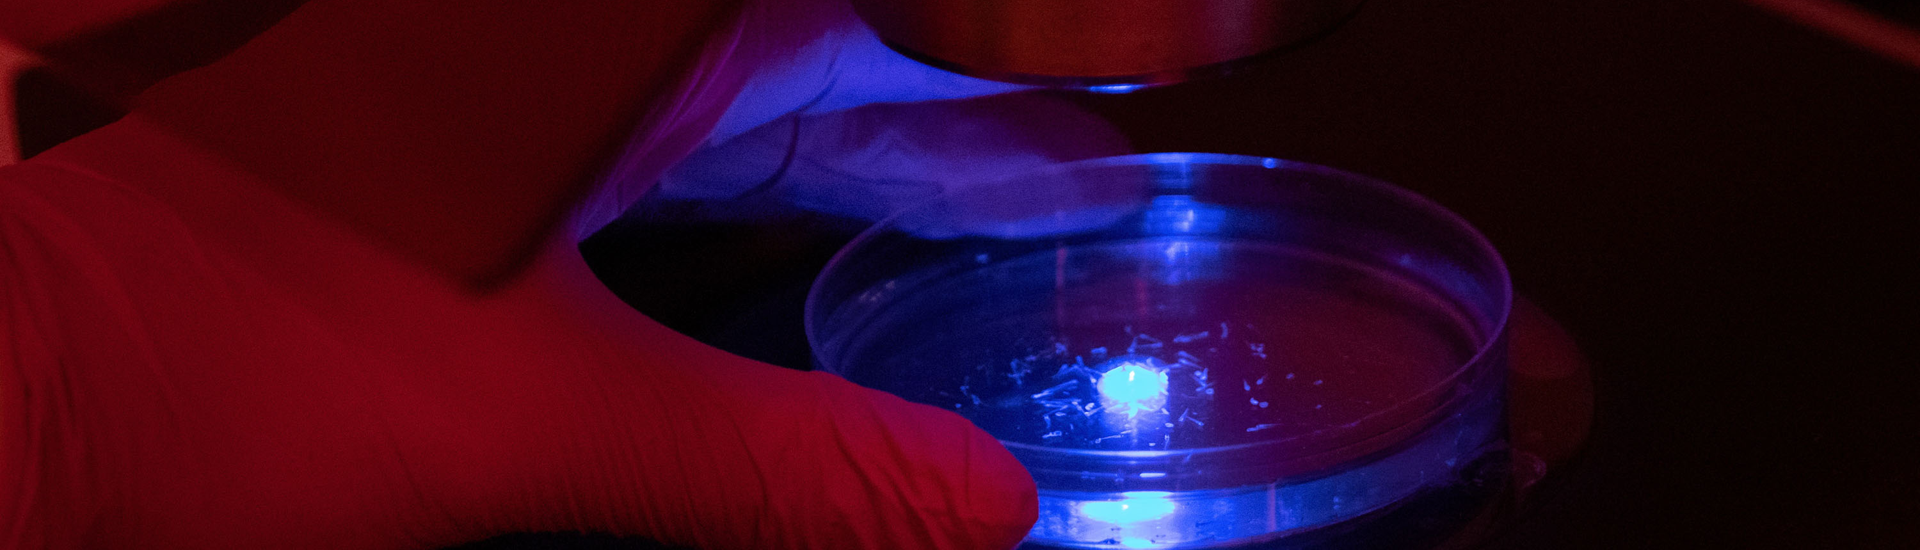 Petri dish under microscope lit in blue light